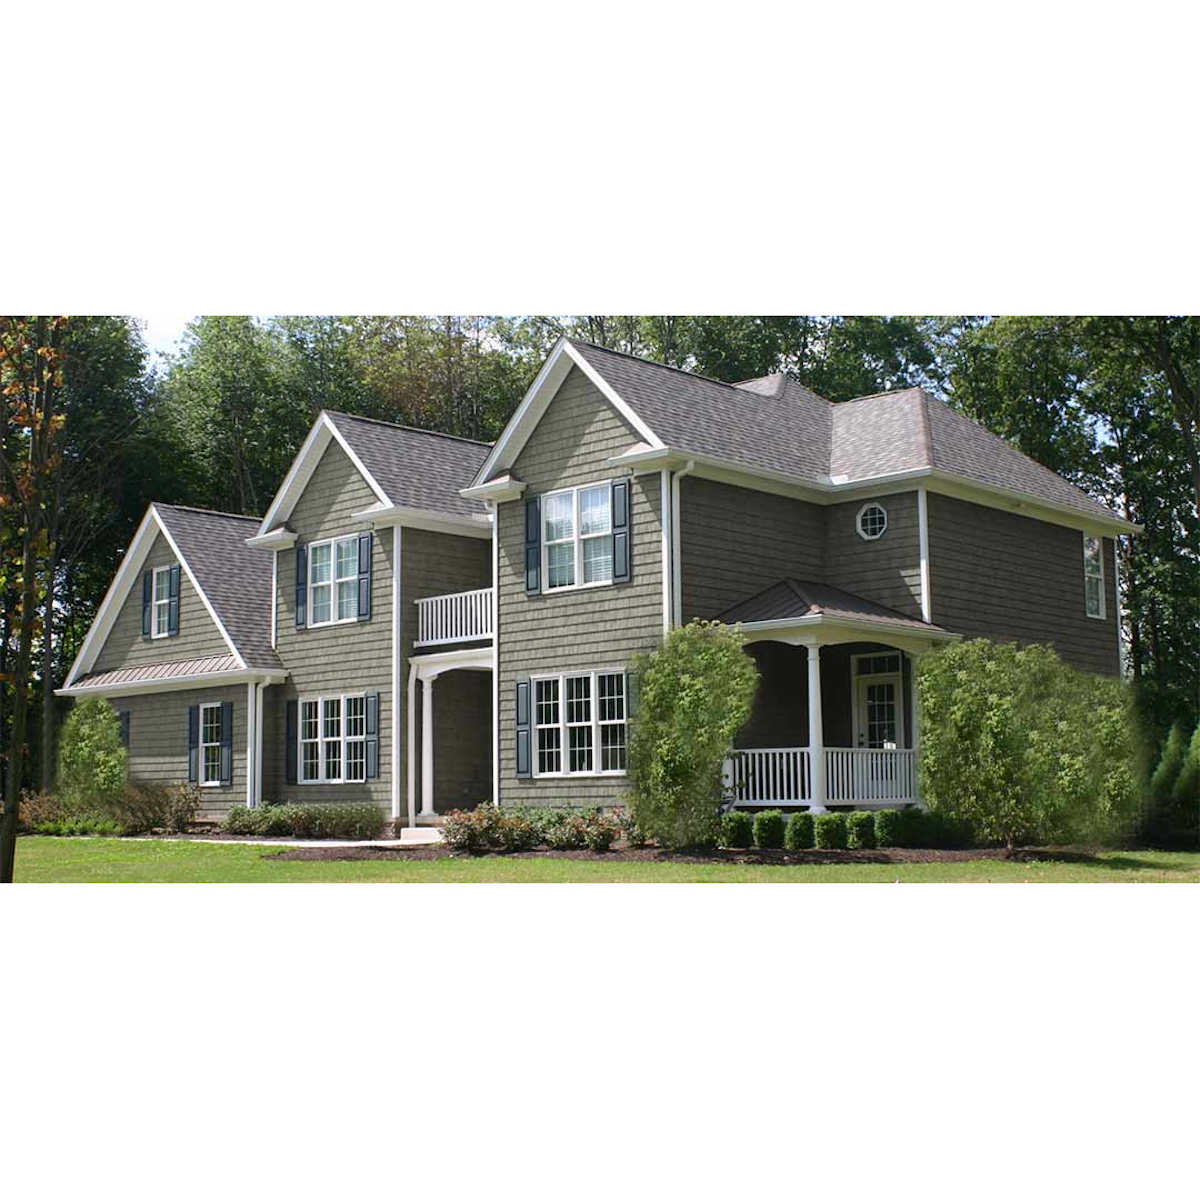 Granite Gray Siding On a House